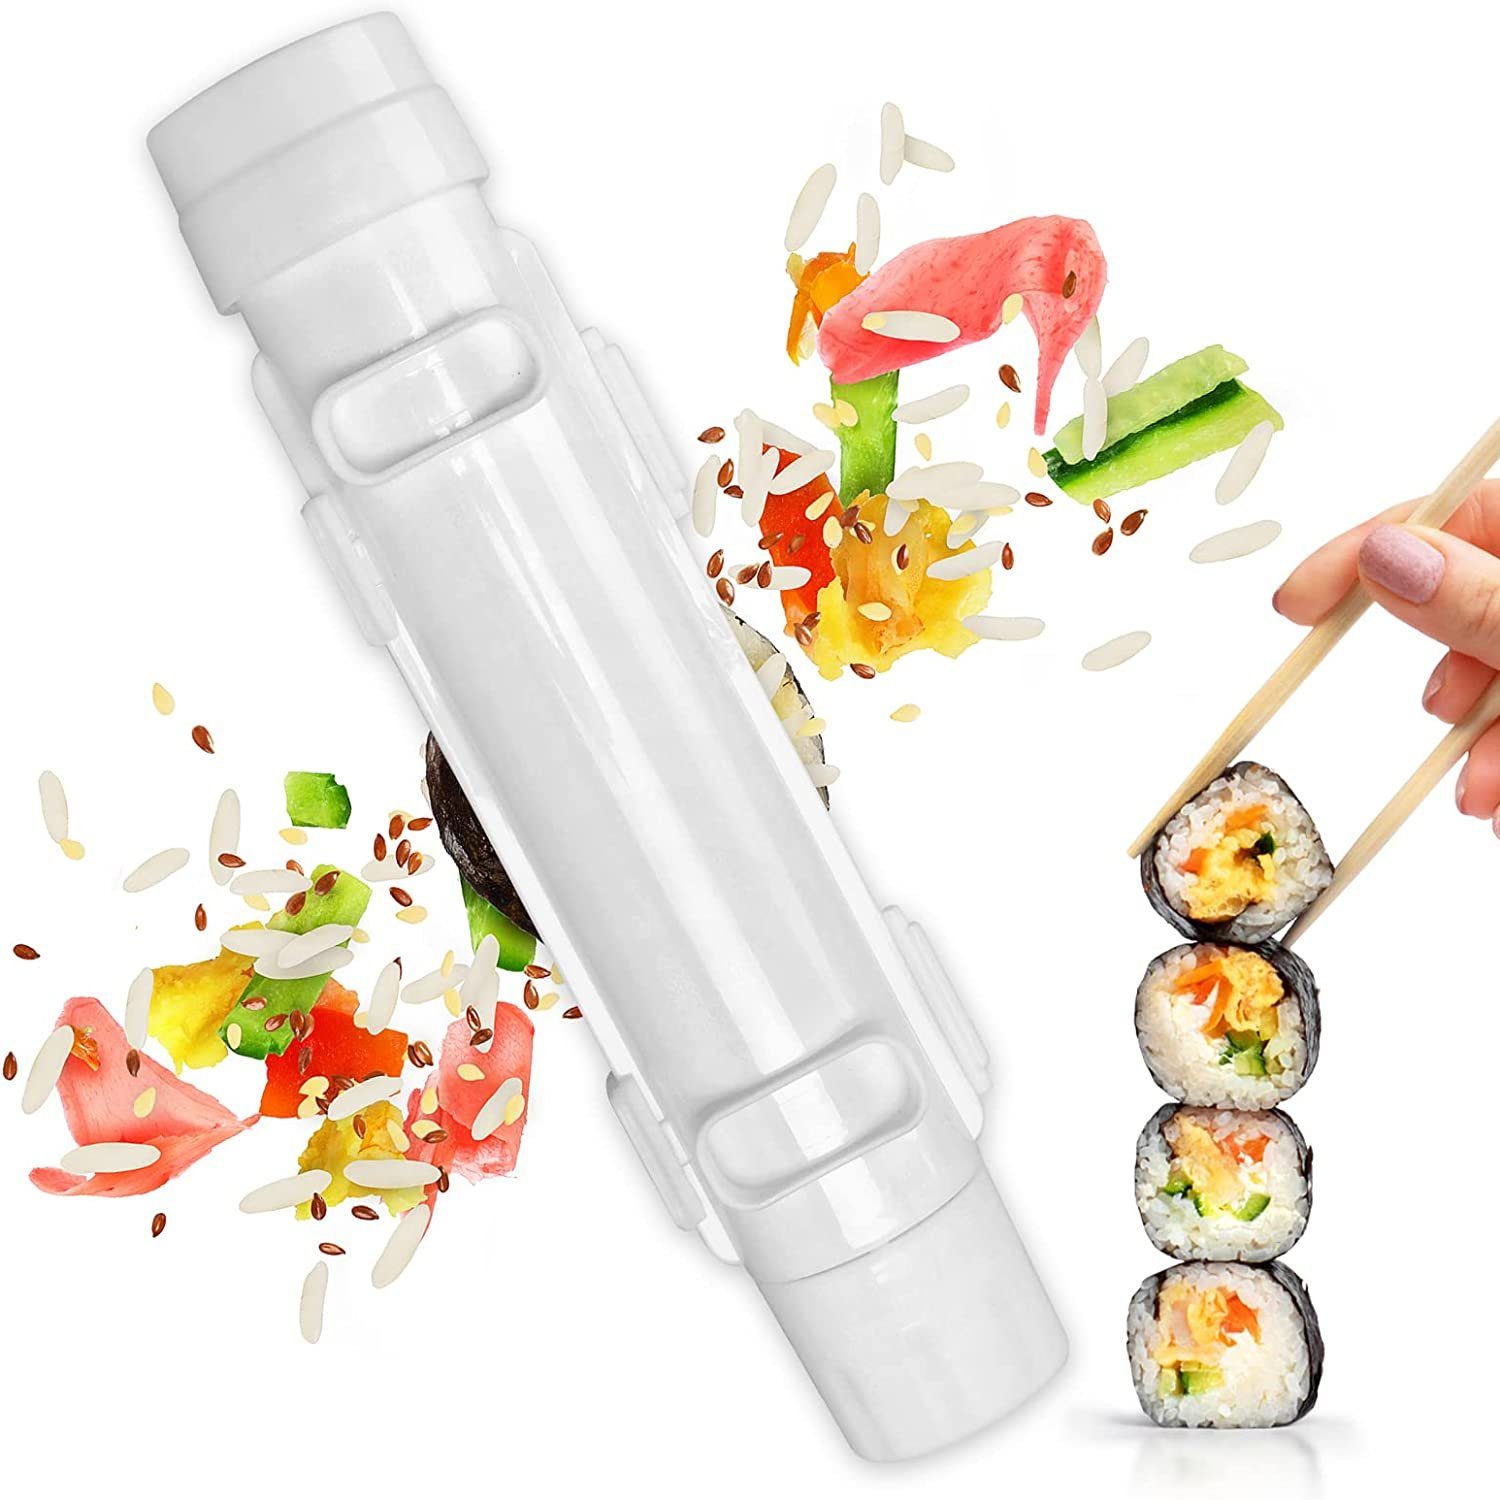 gemeinsame Zubereitungswerkzeuge Weiß NUODWELL Sushi-Bazooka, Sushi-DIY-Maschine, Sushiteller